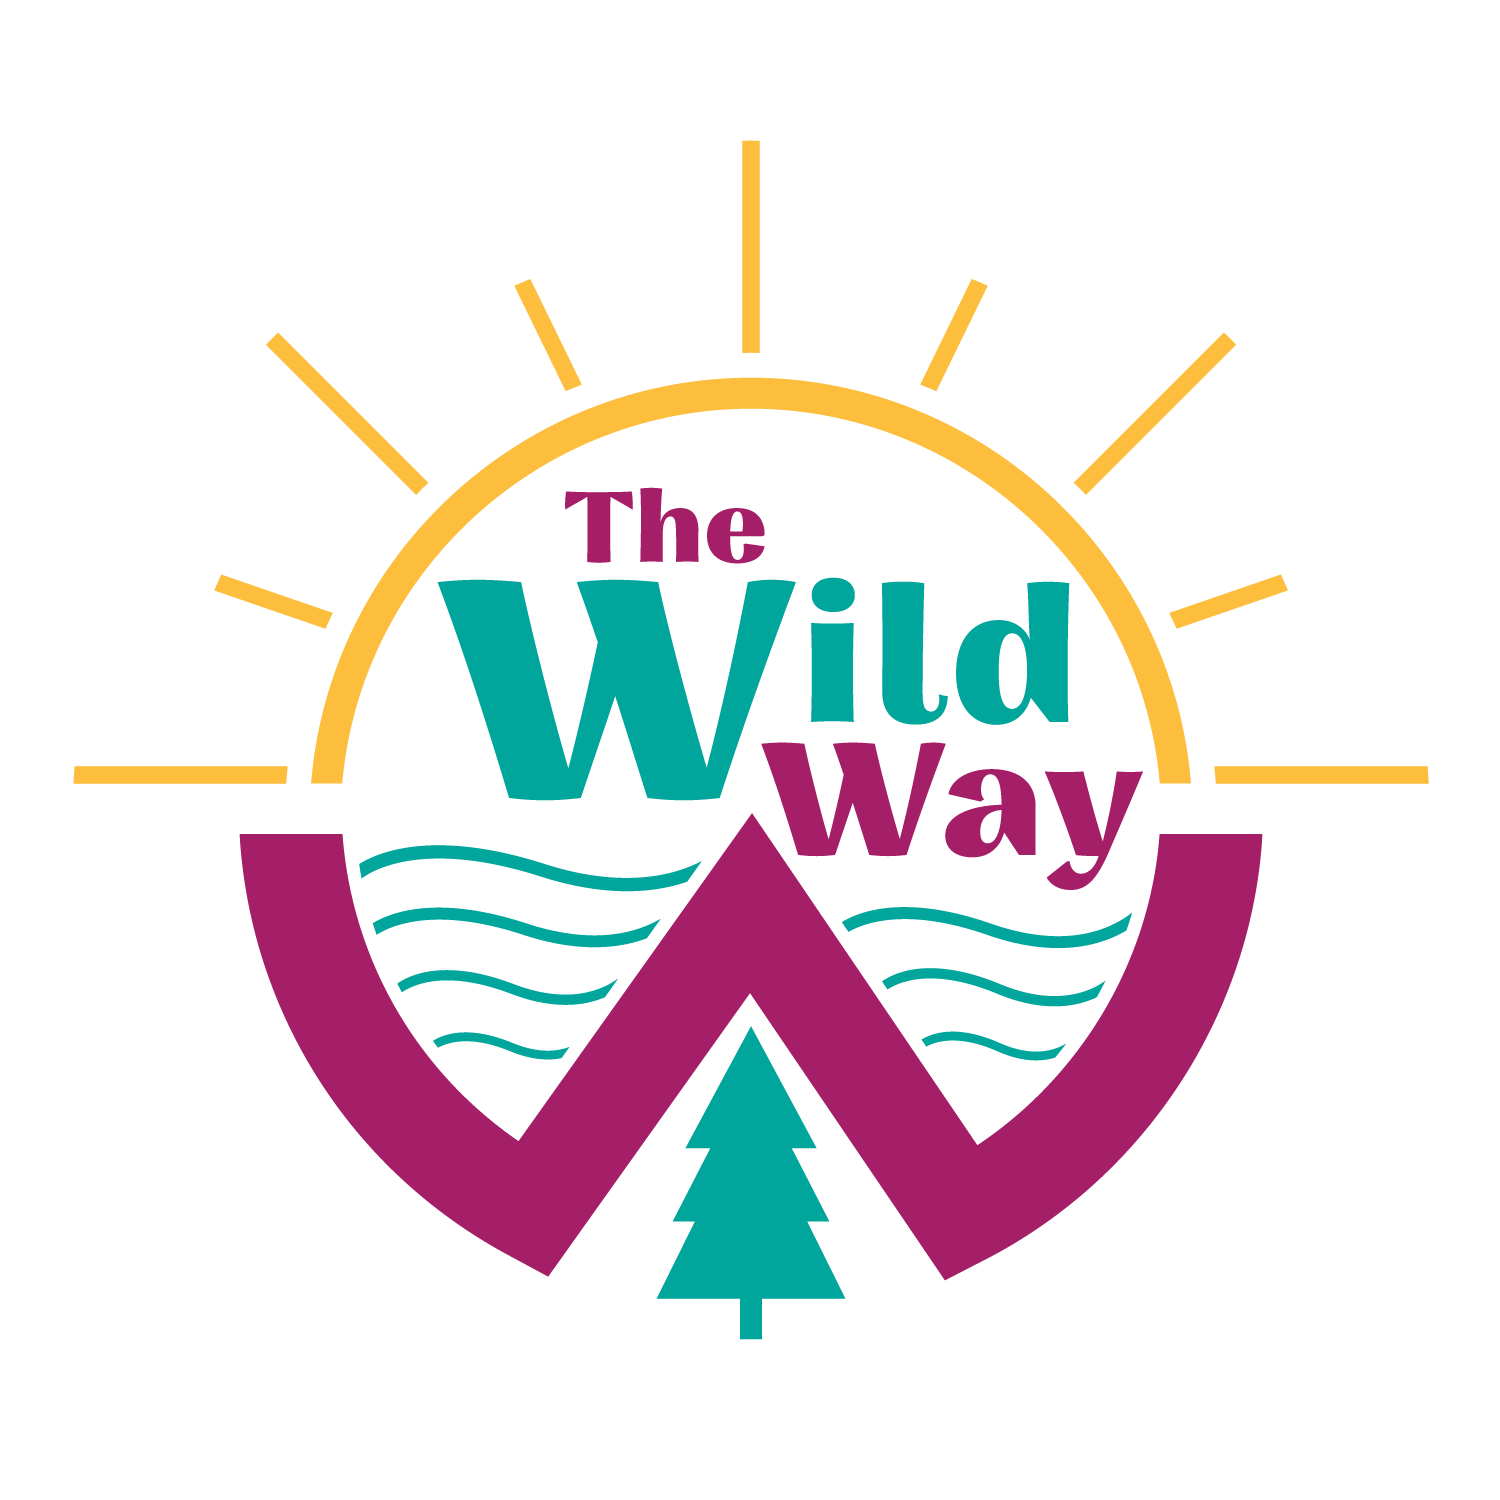 The Wild Way